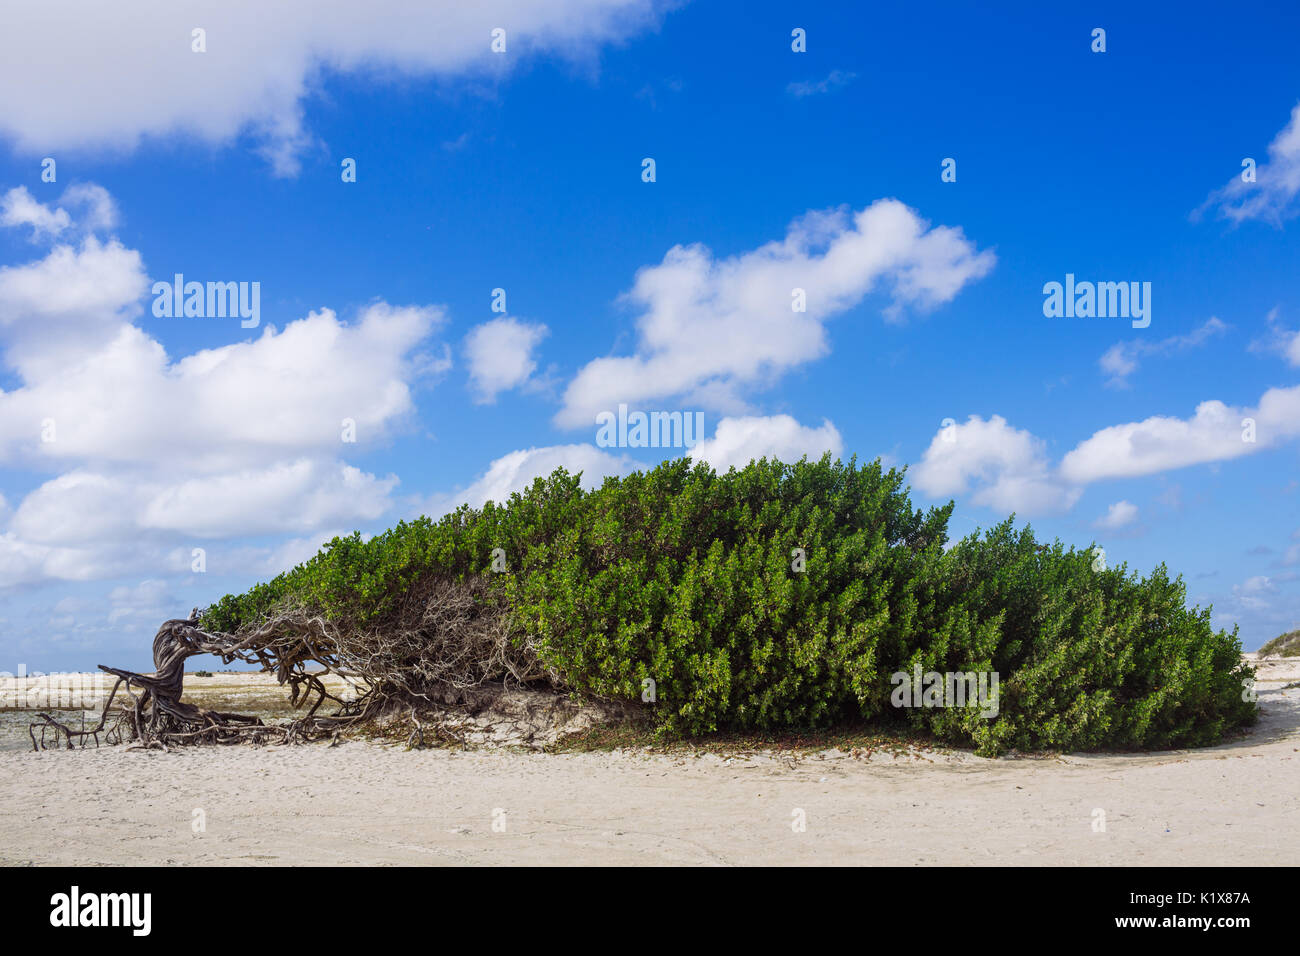 L'albero pigro (Arvore da Preguiça) nella spiaggia di Jericoacoara, Ceará, Brasile Foto Stock